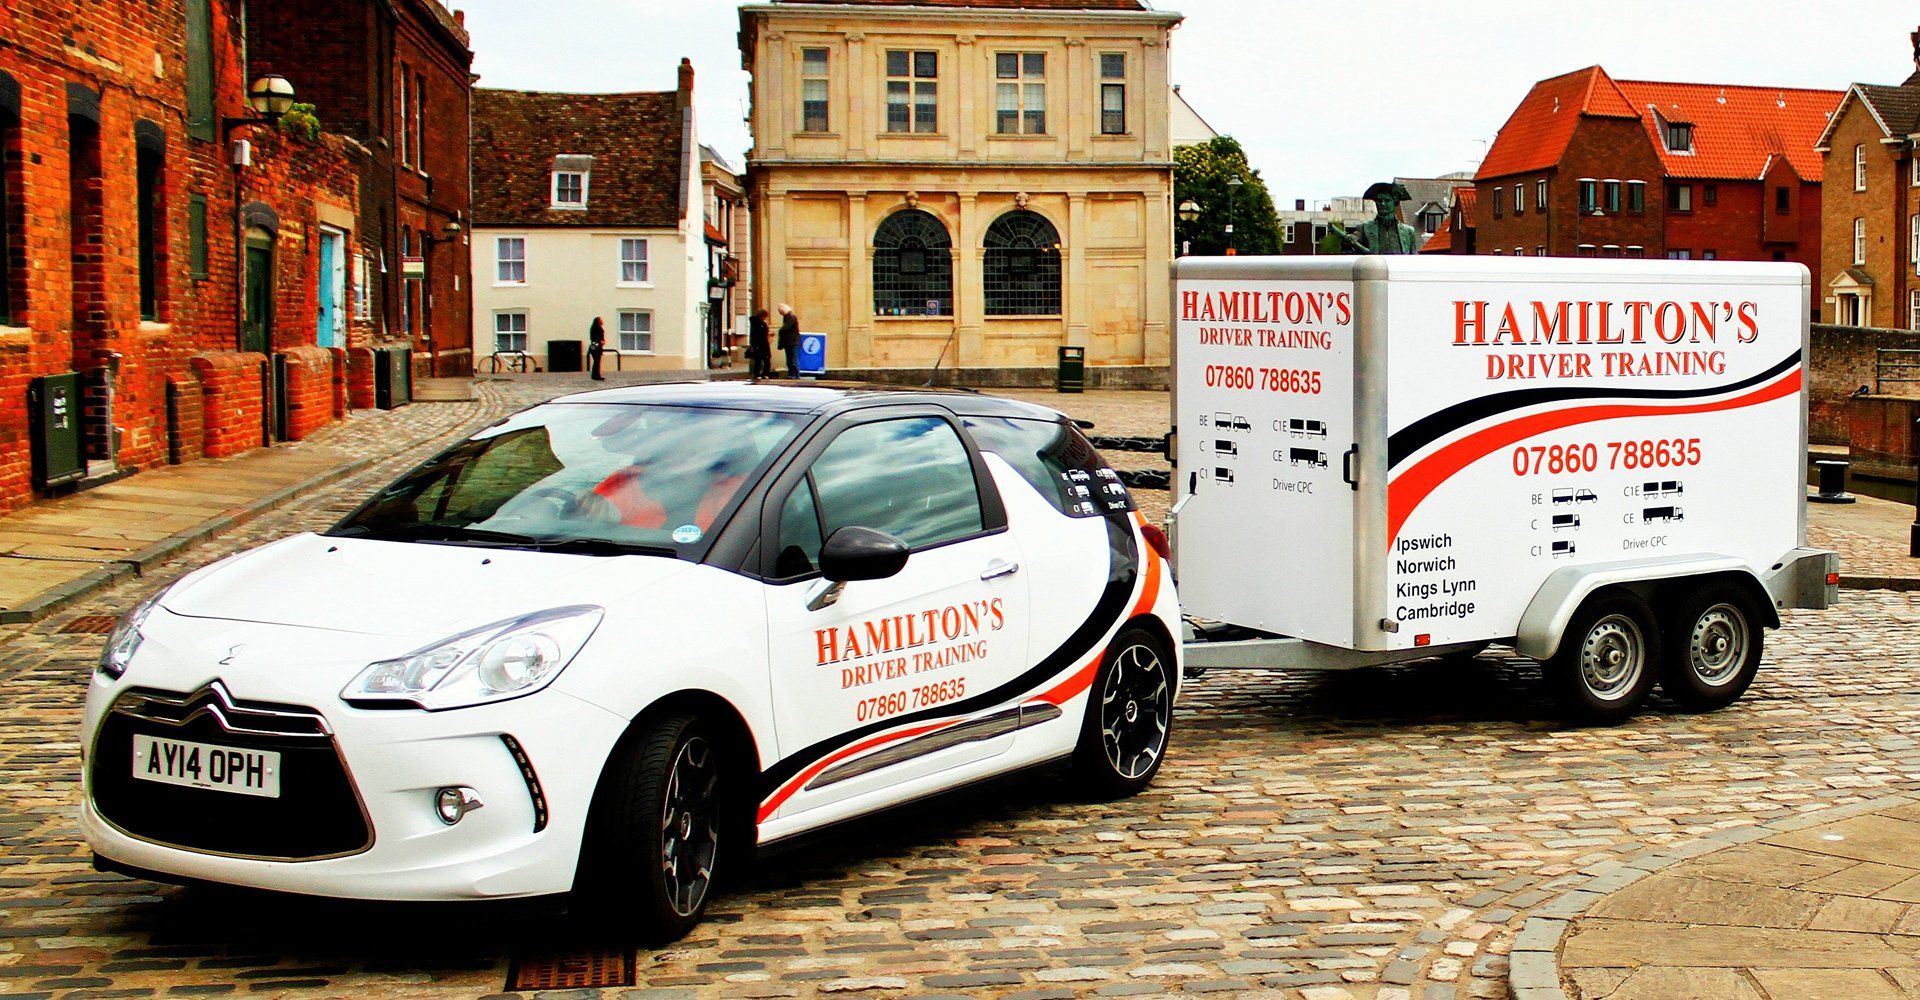 Hamiton's car and trailer training